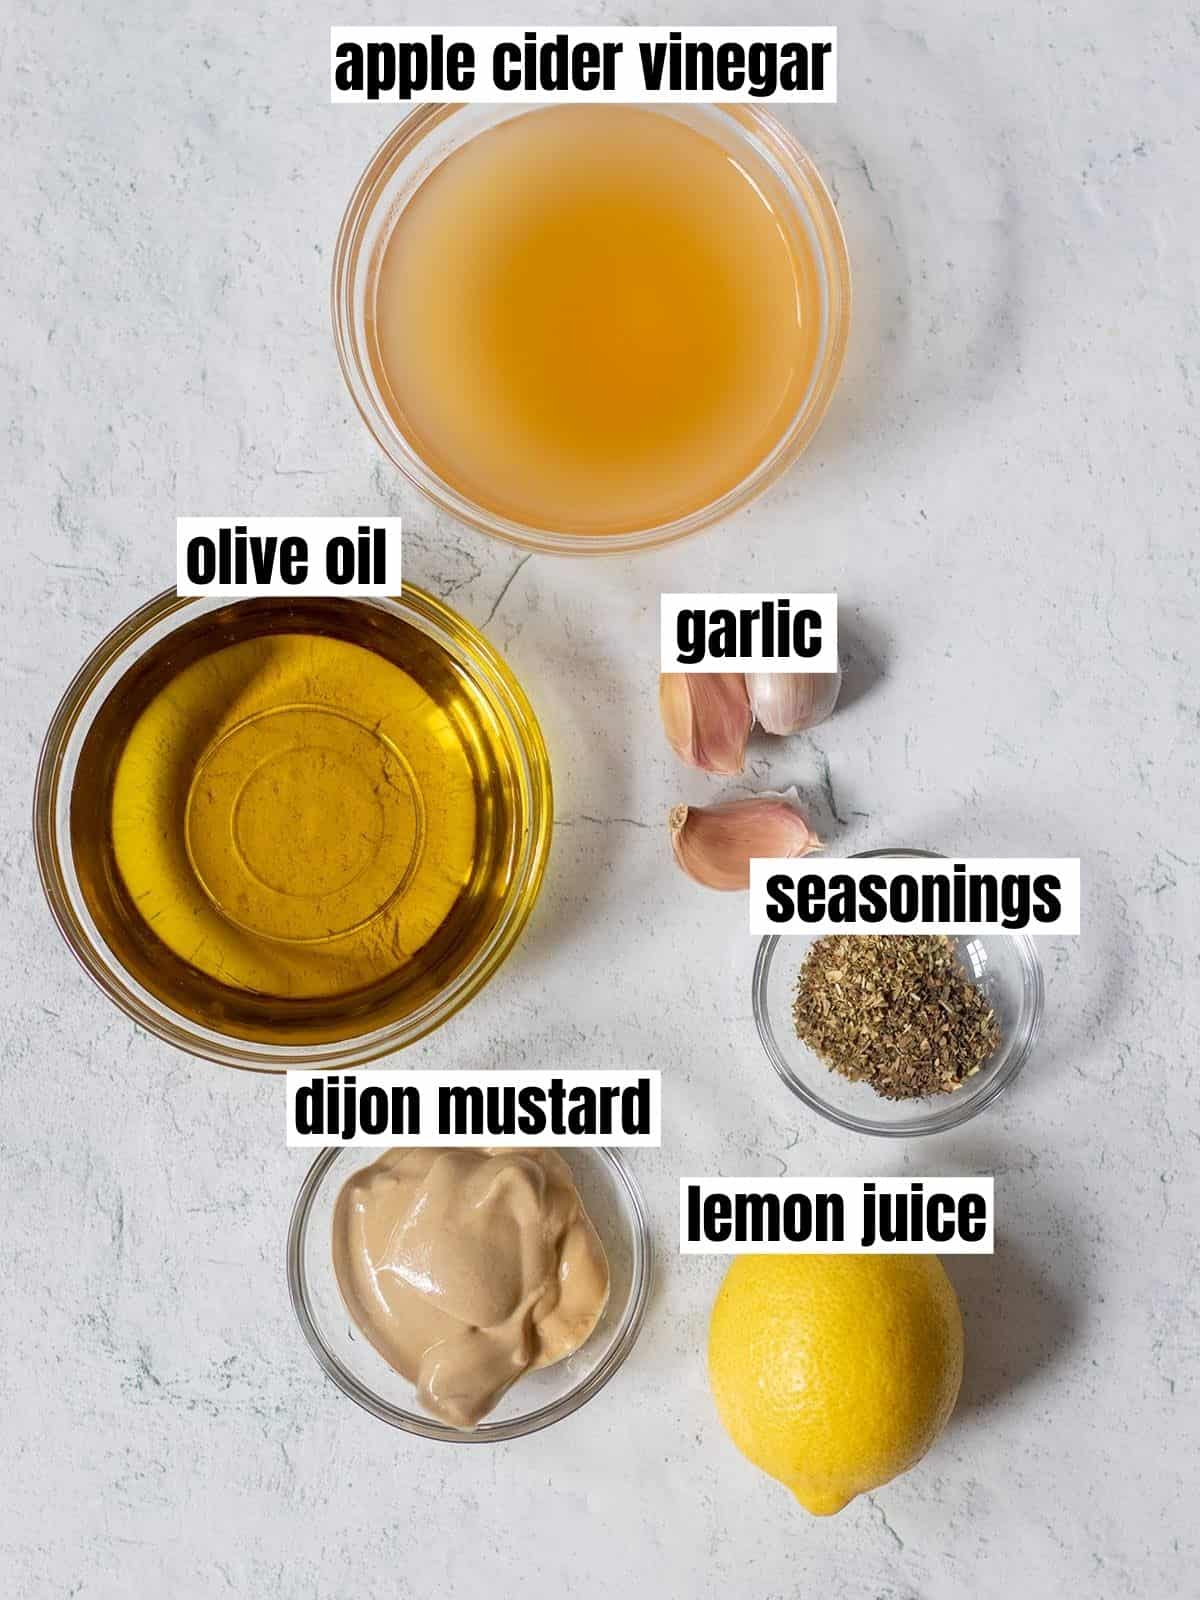 apple cider vinegar, olive oil, garlic, dijon mustard, seasonings, lemon juice